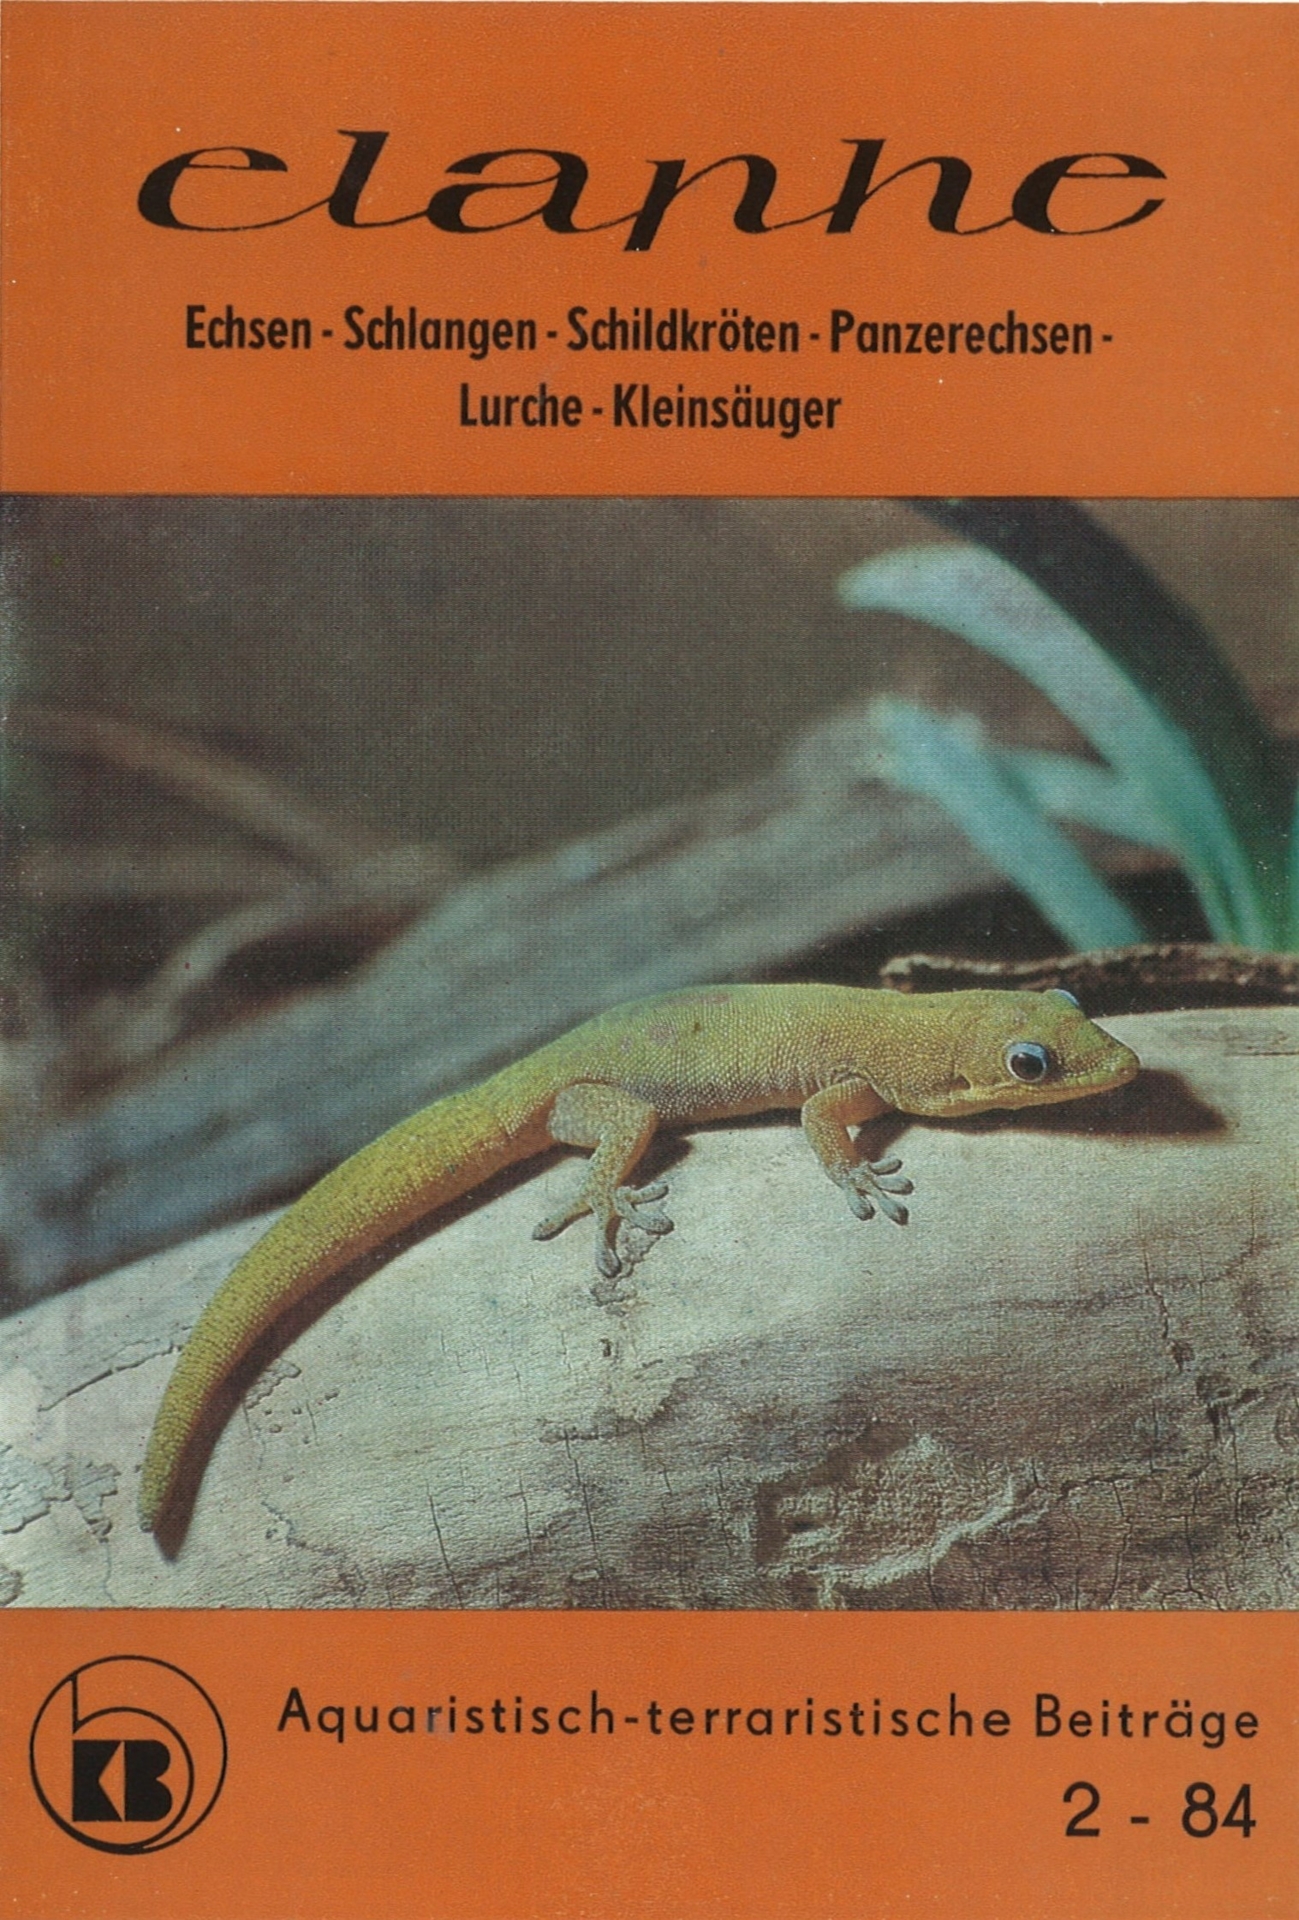 elaphe 1984-2 Titelseite